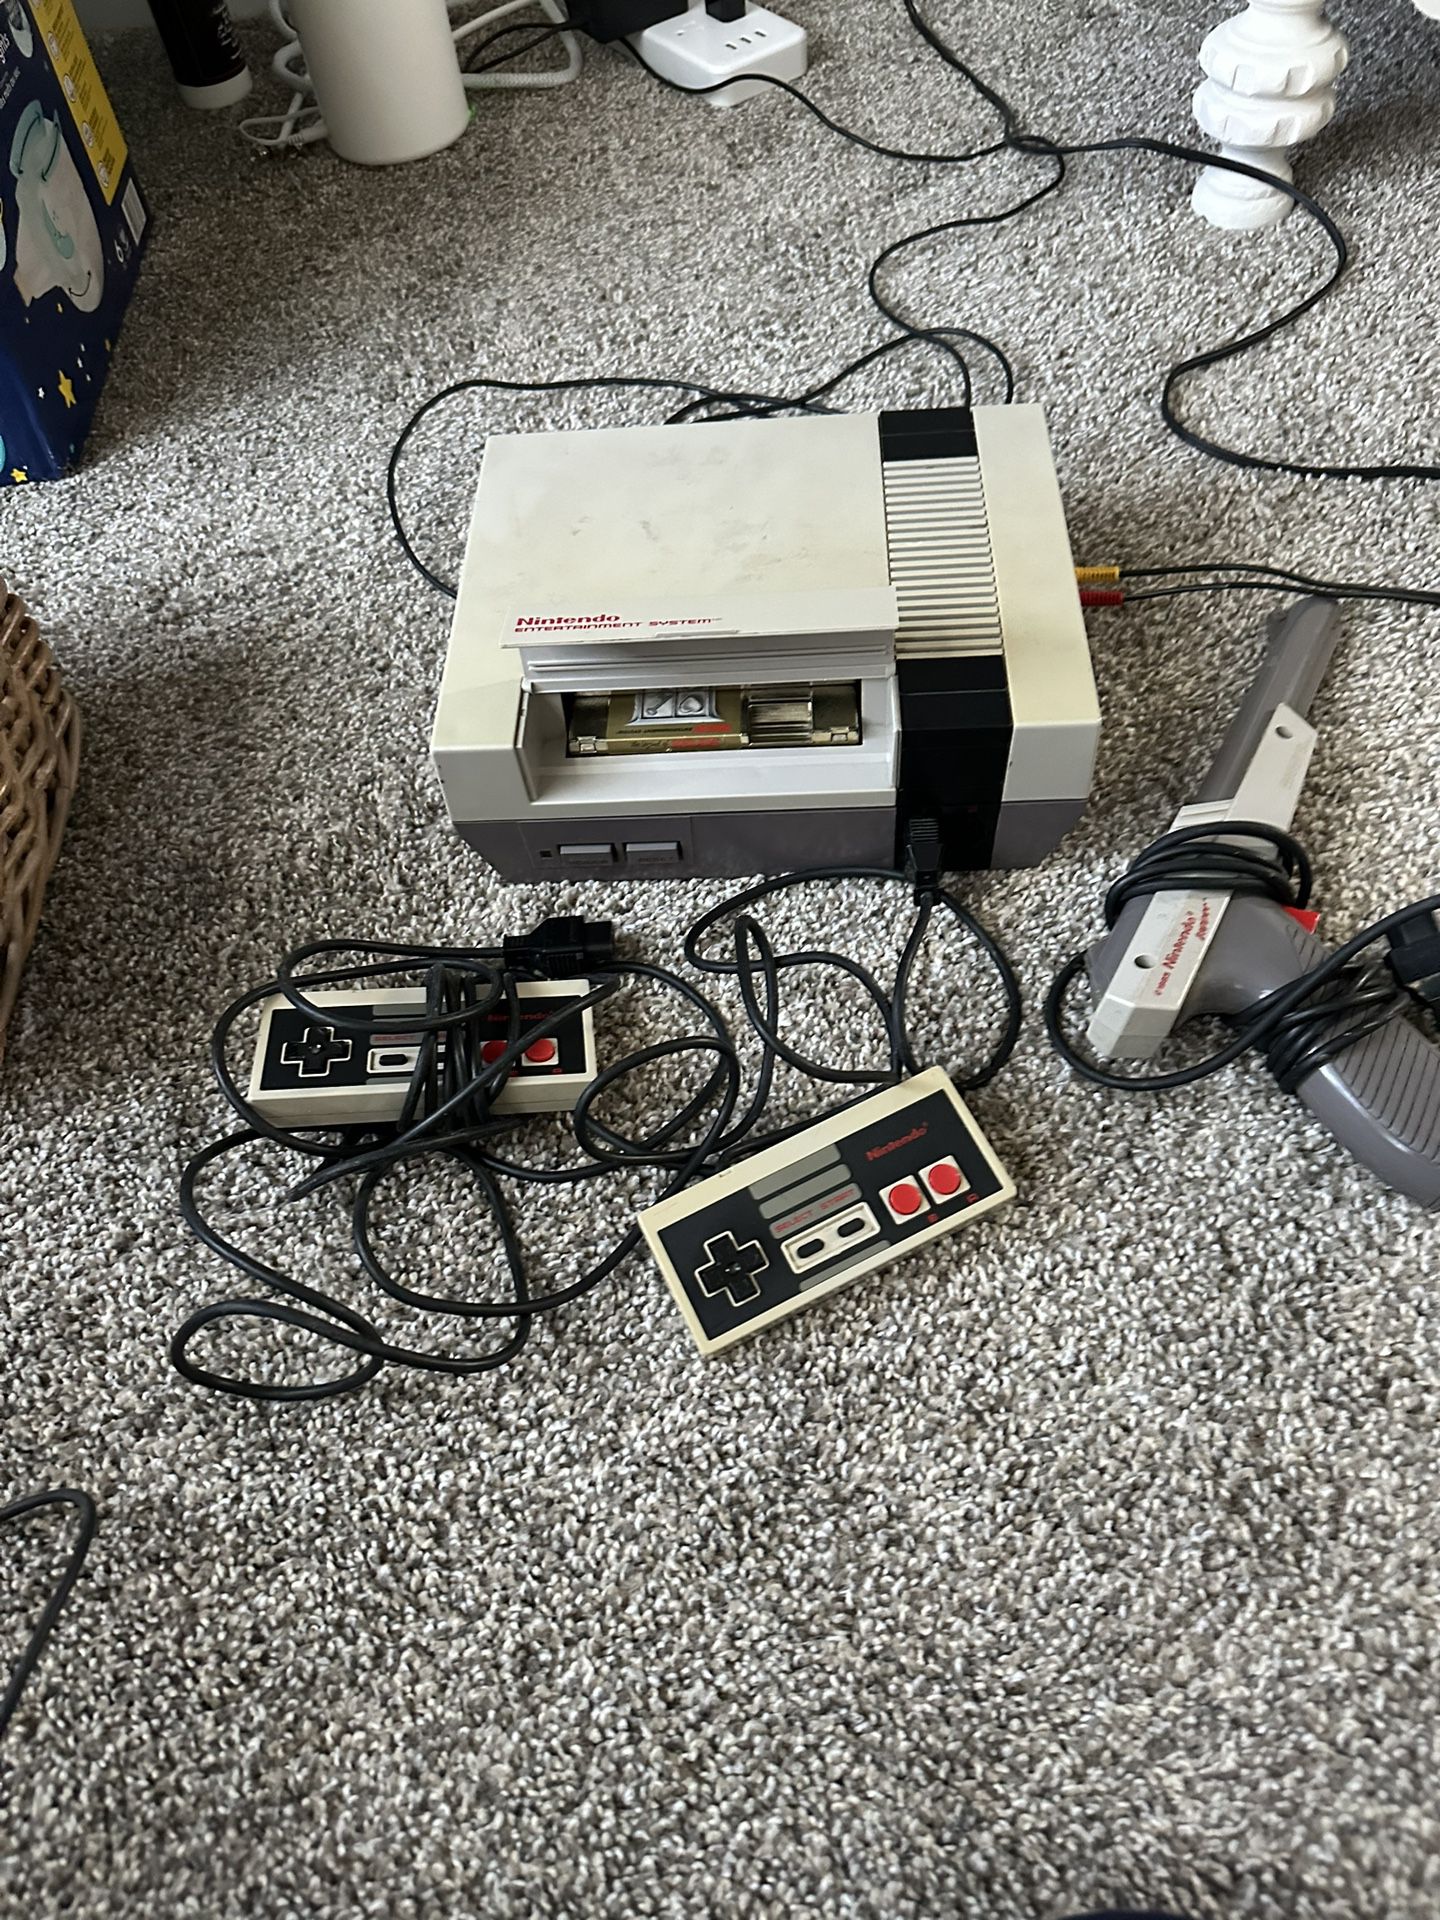 NES bundle